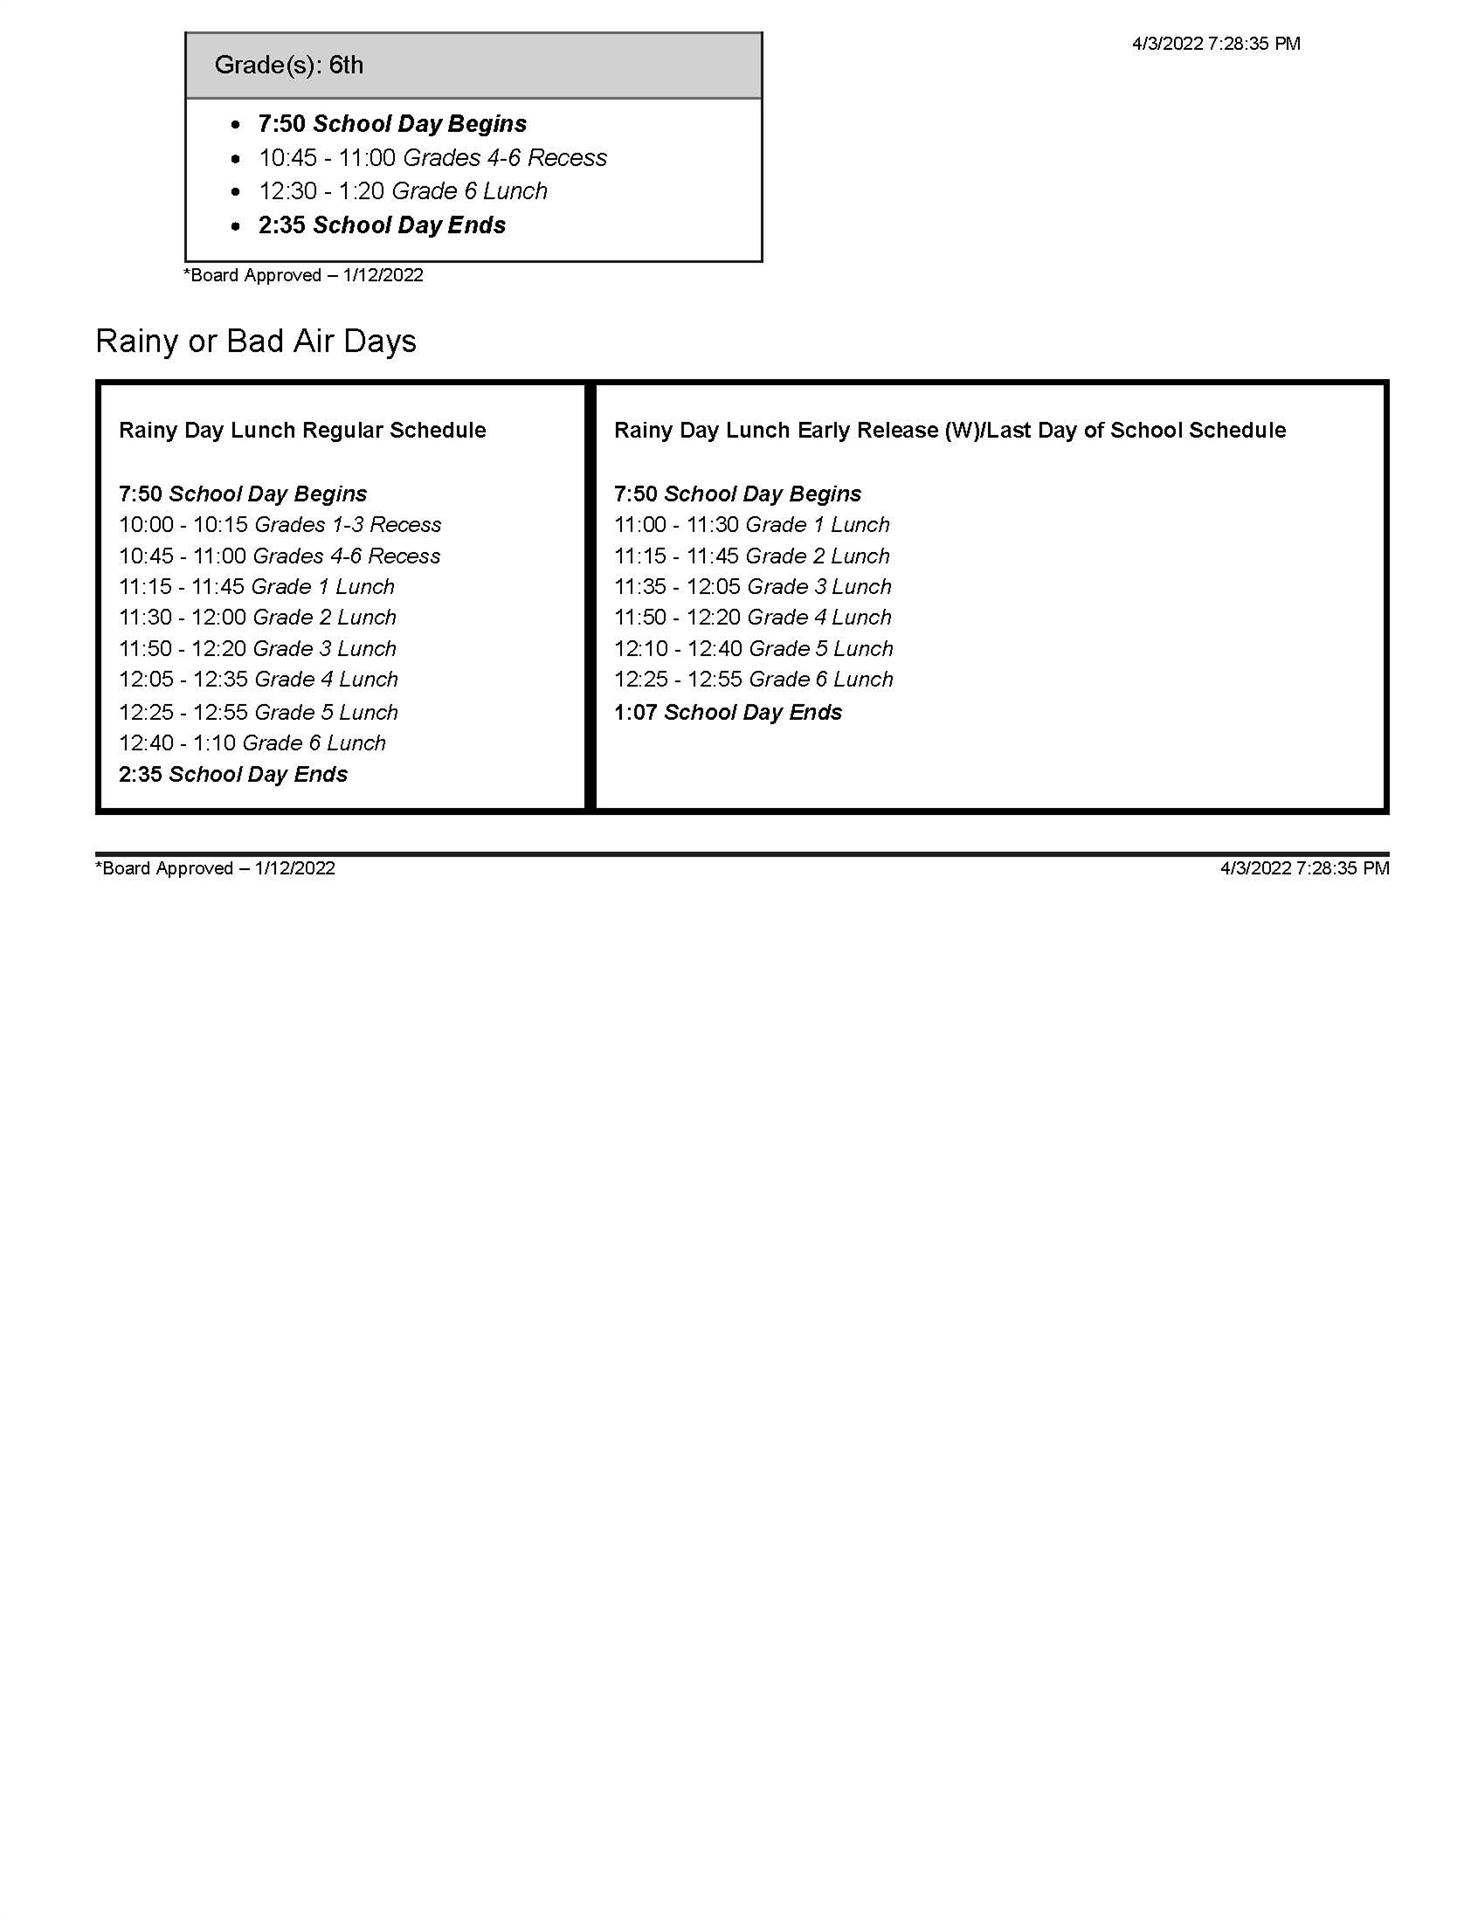 BHS Area Bell Schedule - full text downloadable below